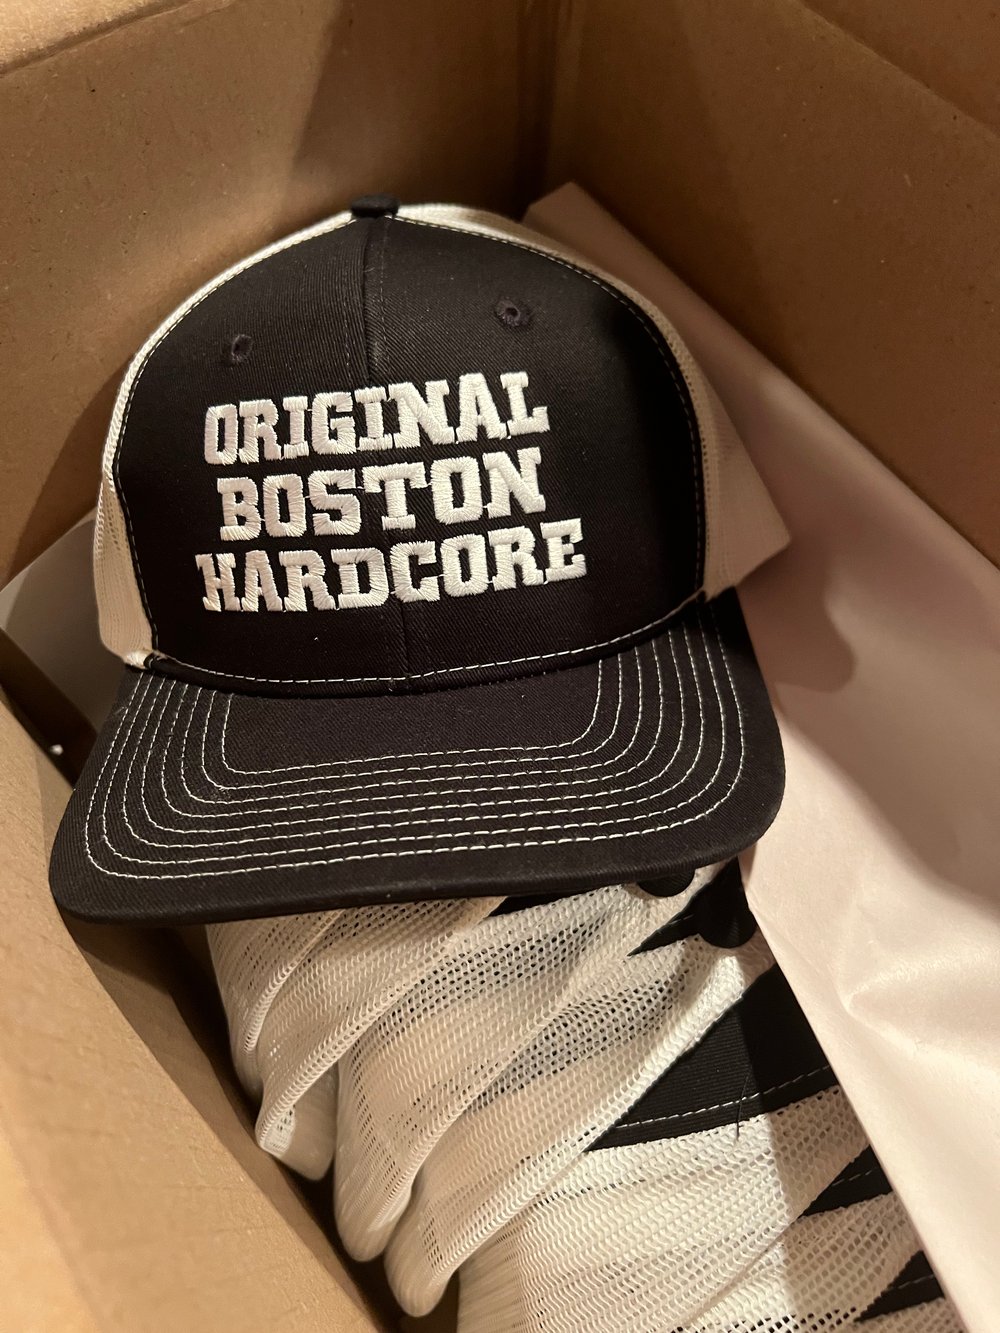 White "Original Boston Hardcore” Logo Snapback Trucker Cap